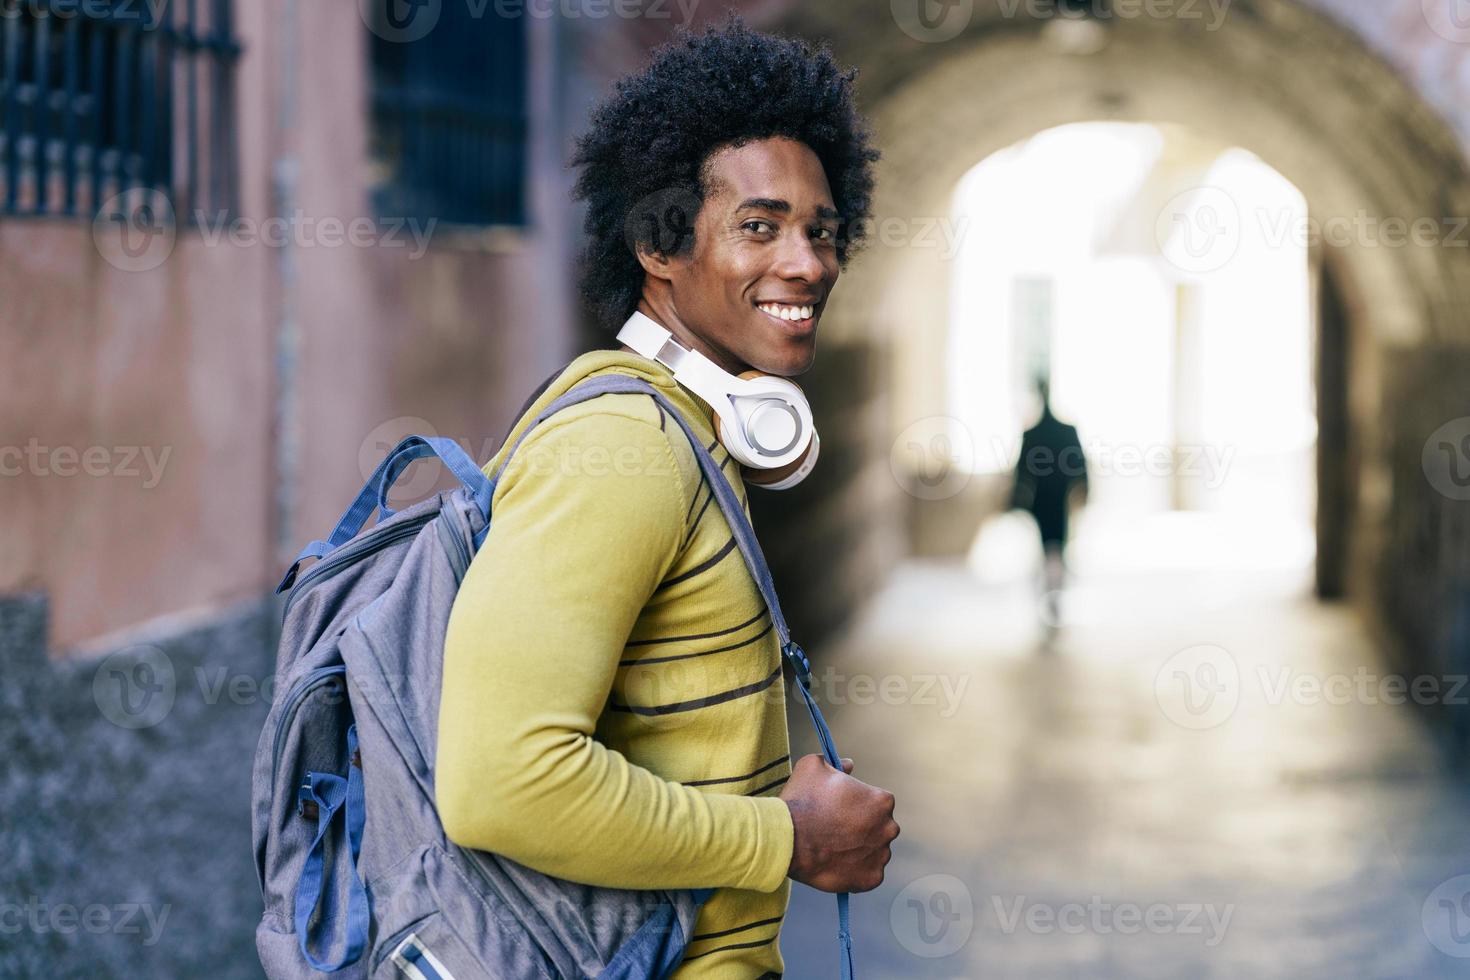 zwarte man met afro-haar sightseeing in granada foto